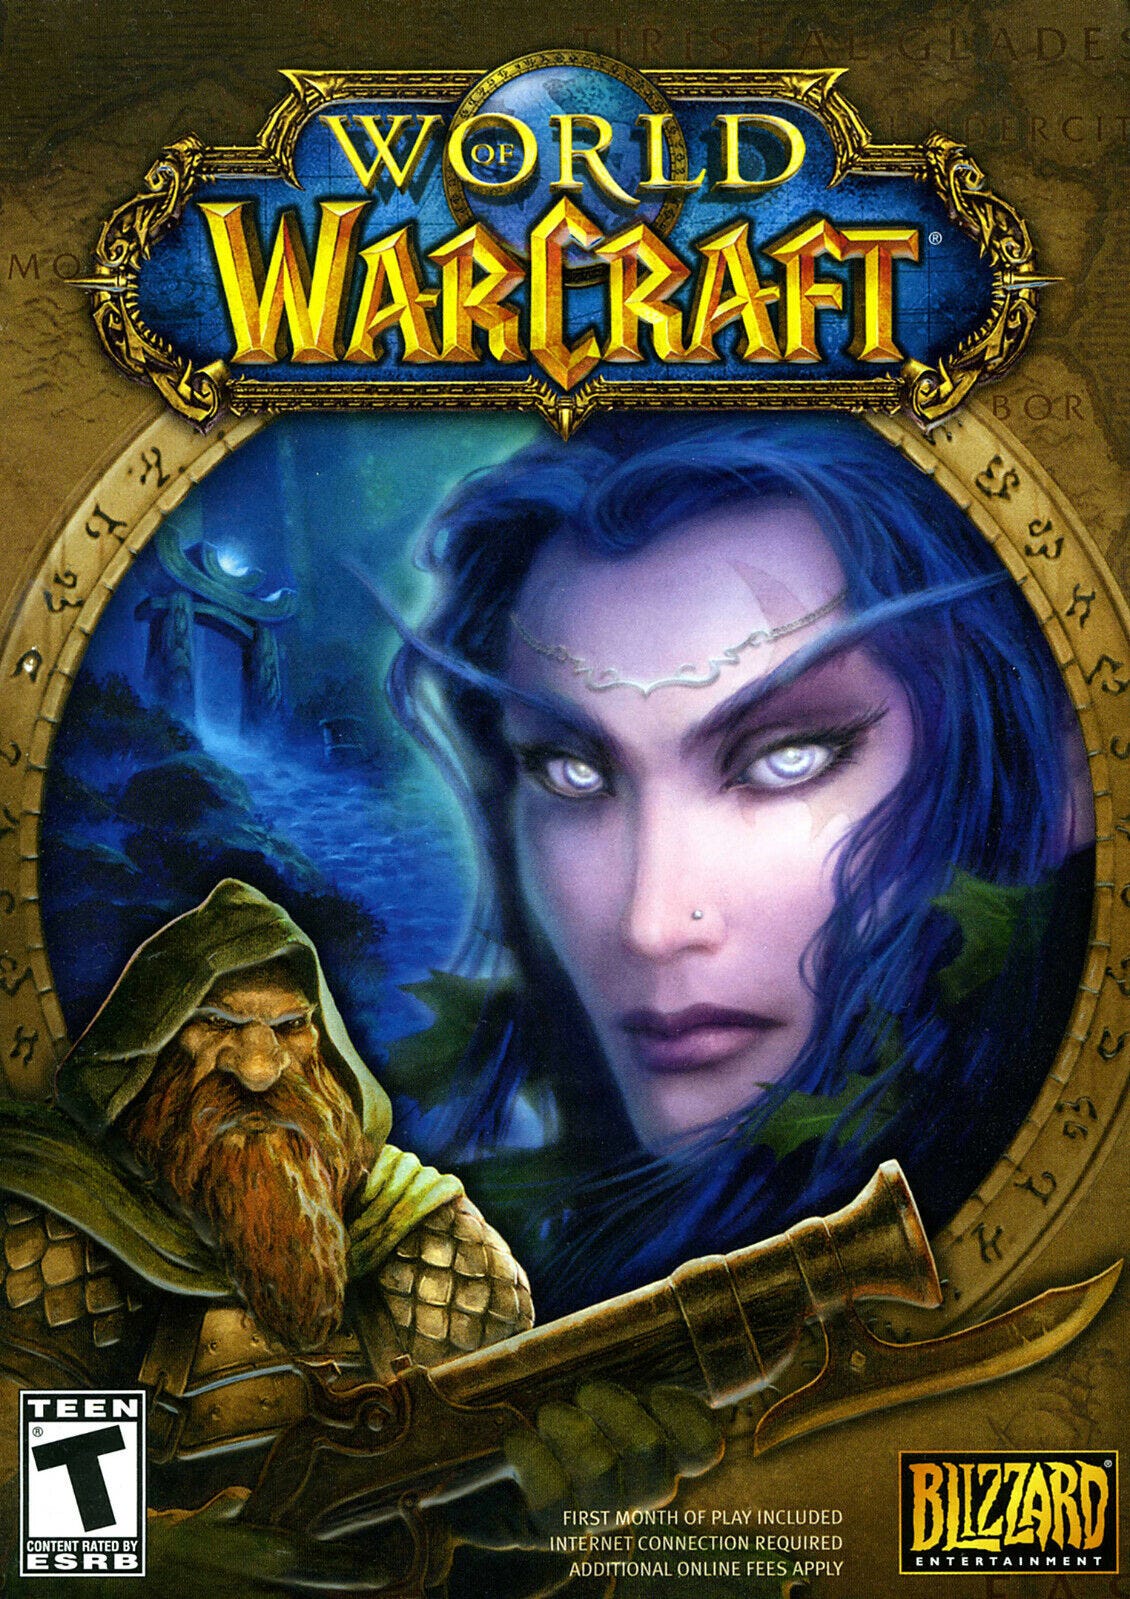 World of Warcraft Box Art Posters A4 (297x210mm)- Blizzard, WOW | eBay